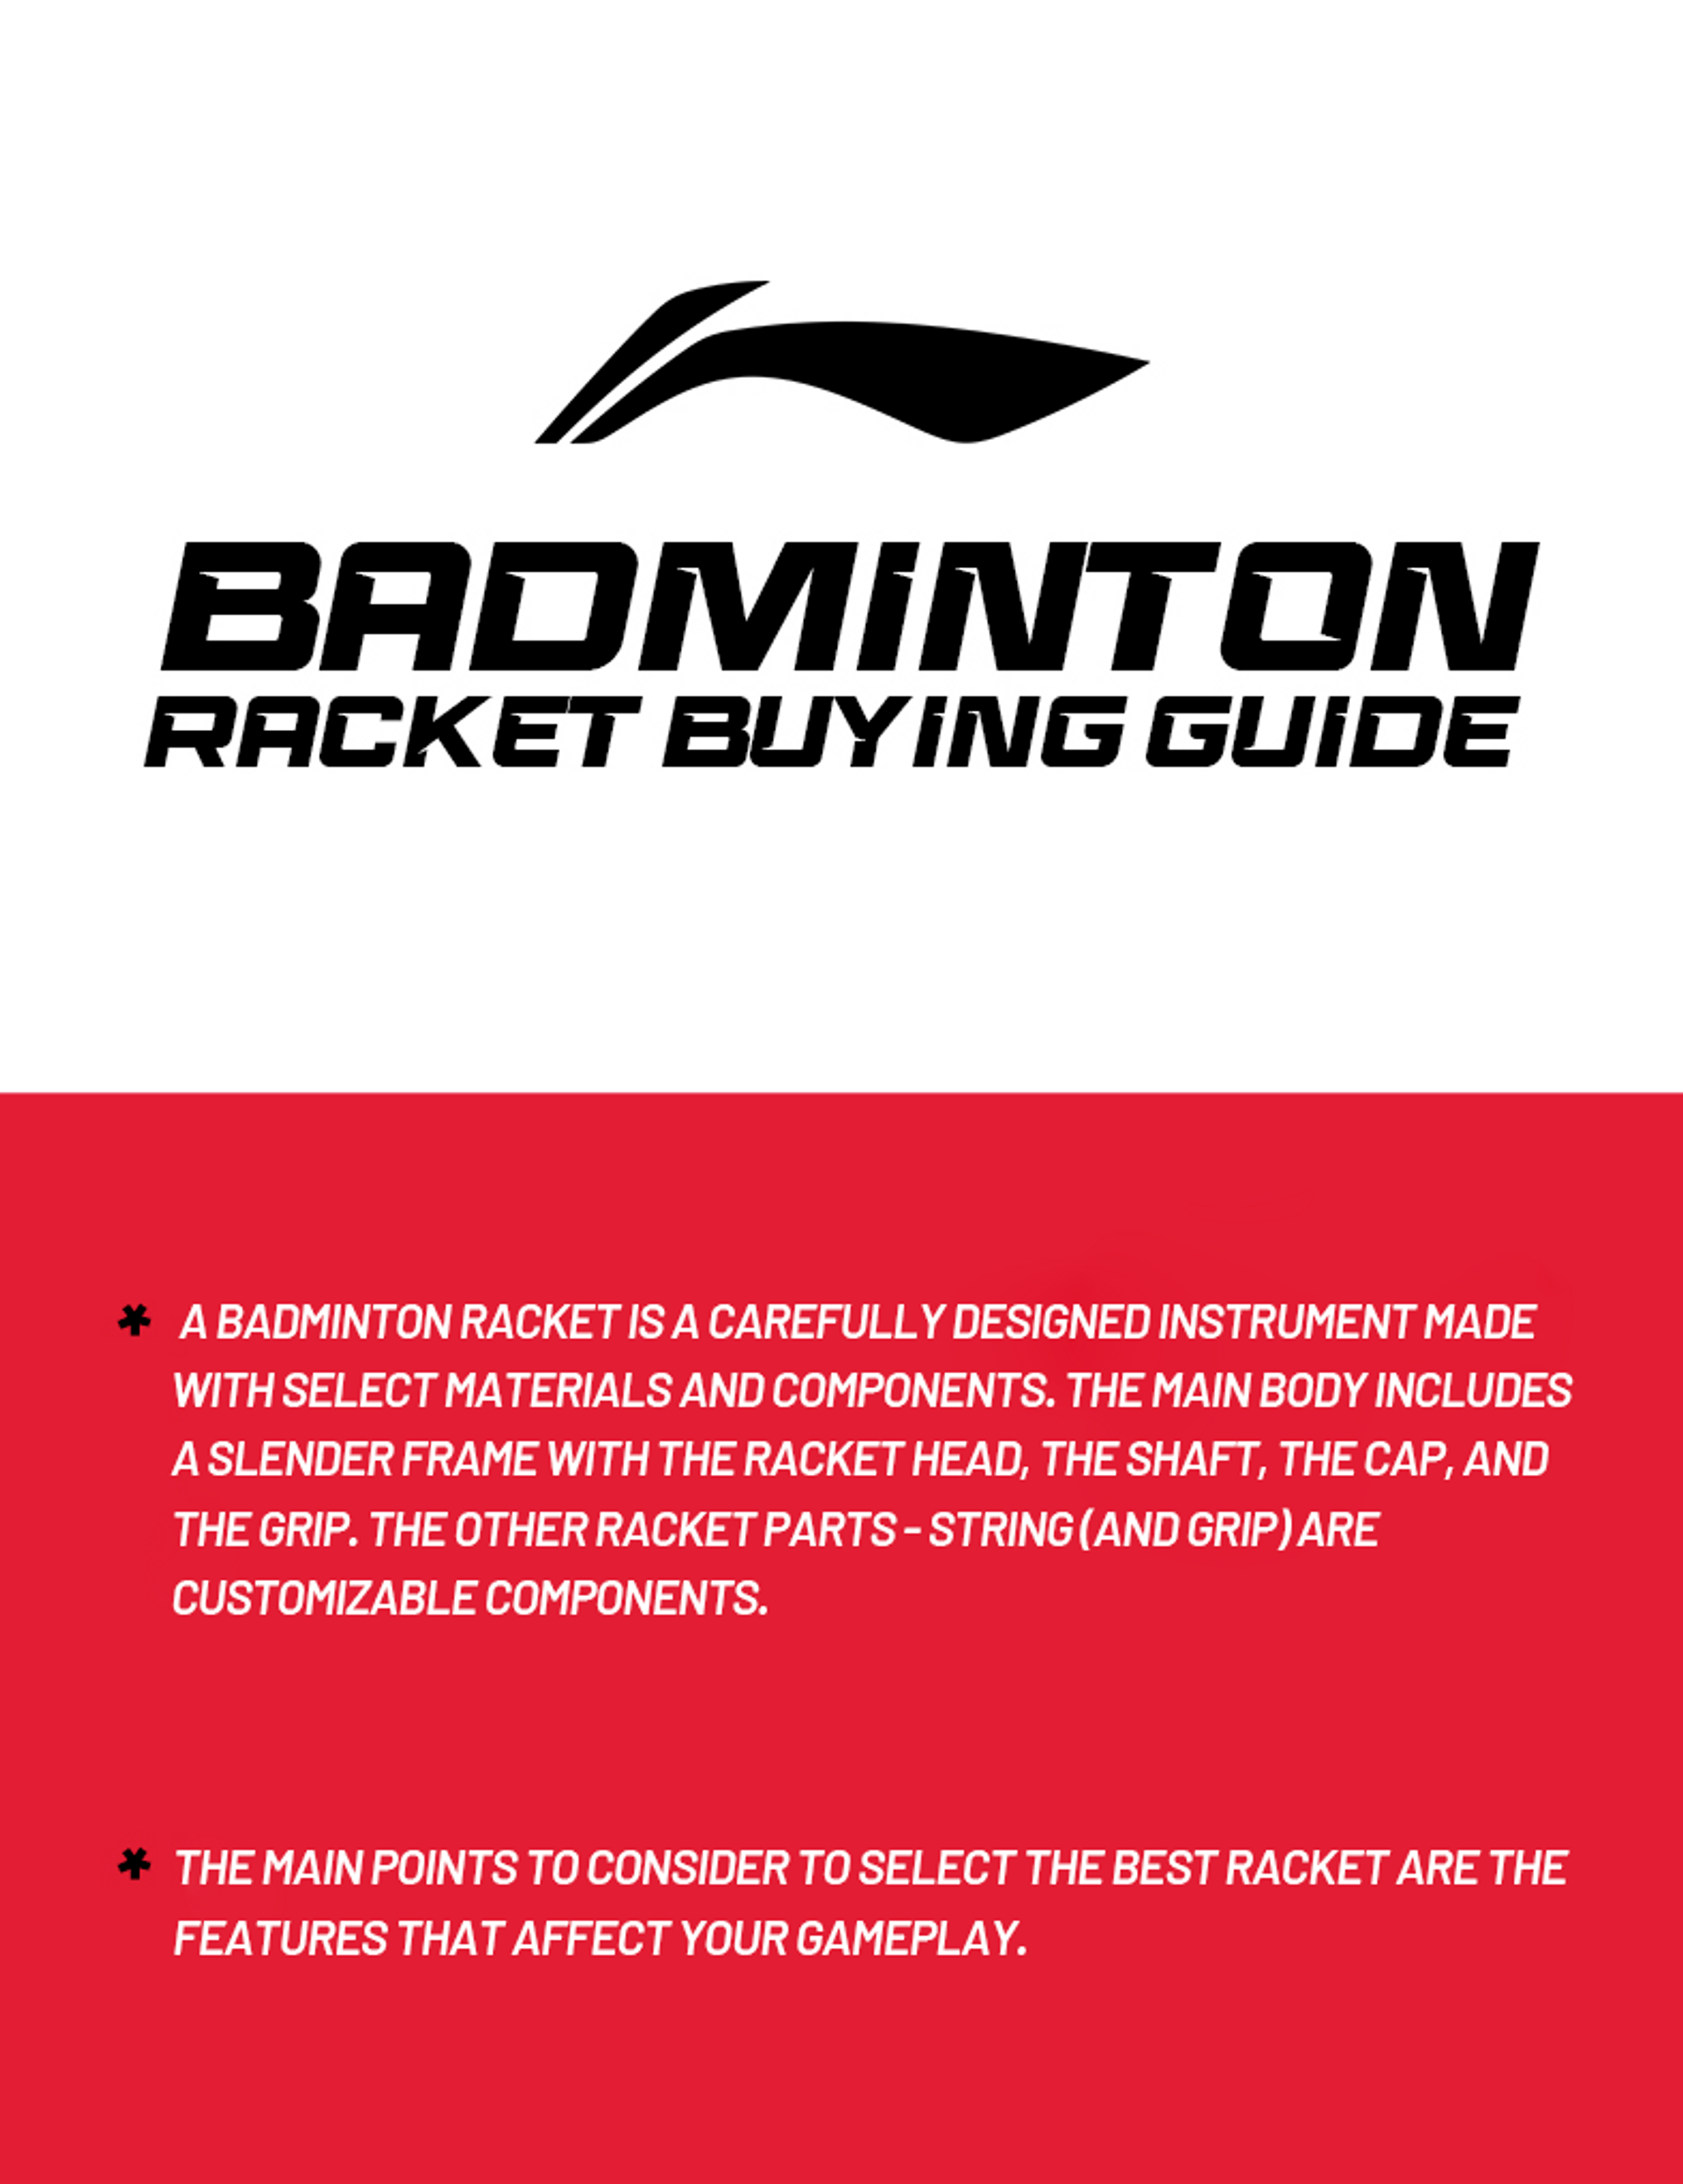 Badminton racket buying guide